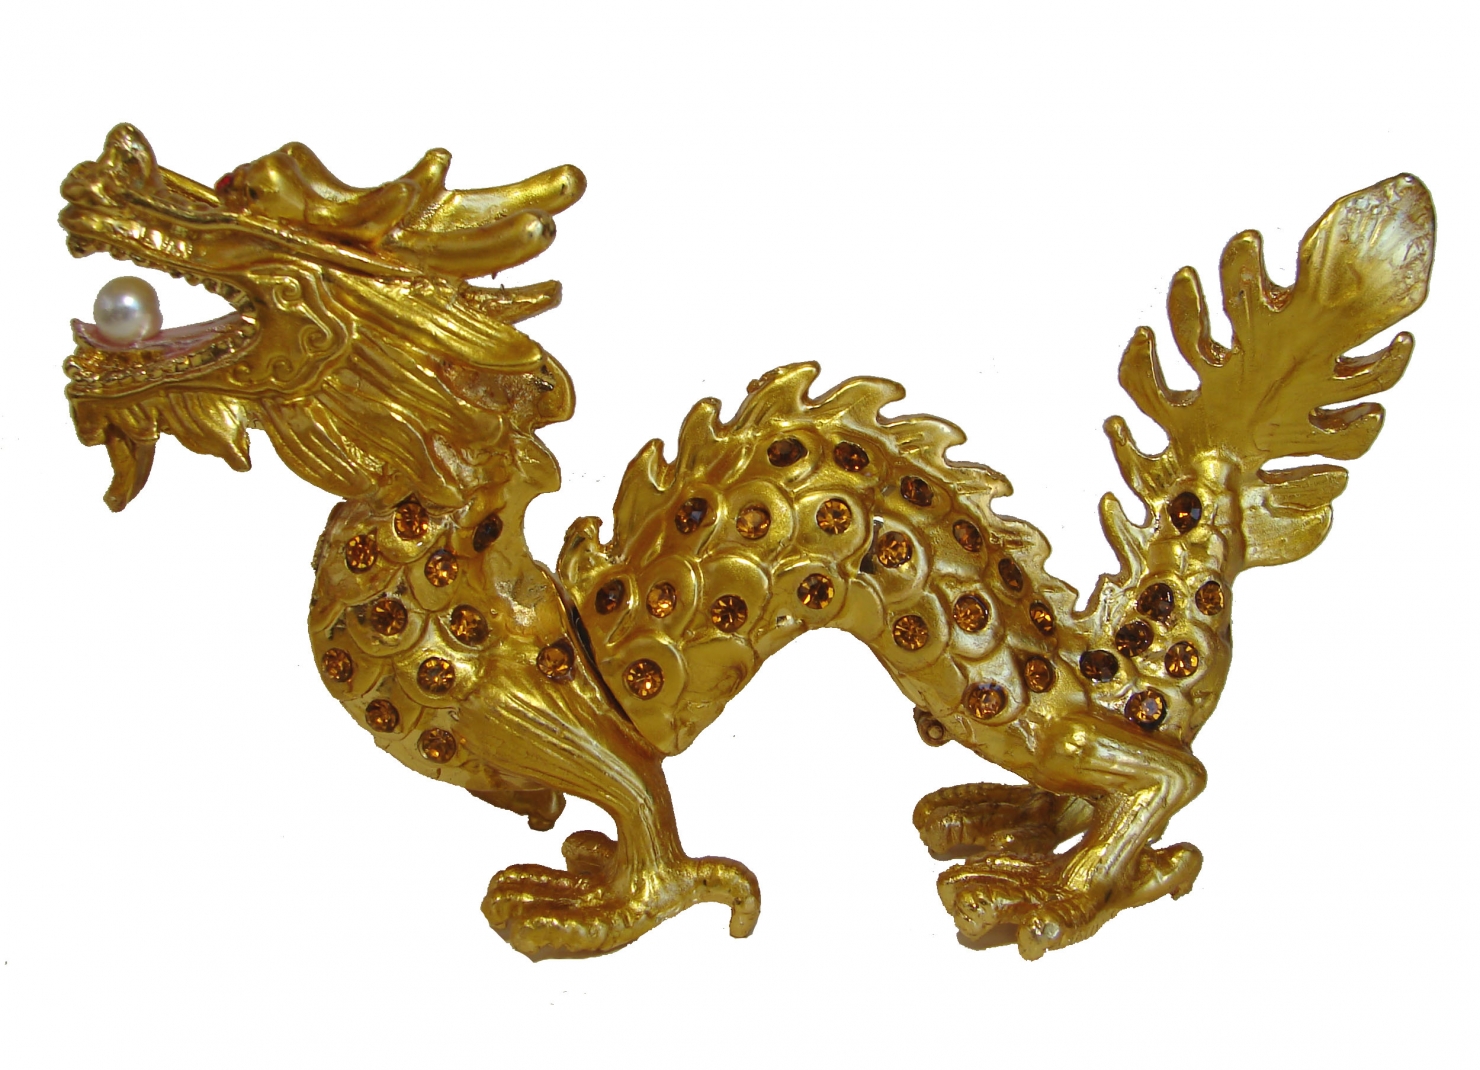 Bejeweled Cloisonne Golden Dragon Statue, Dragon Figurine